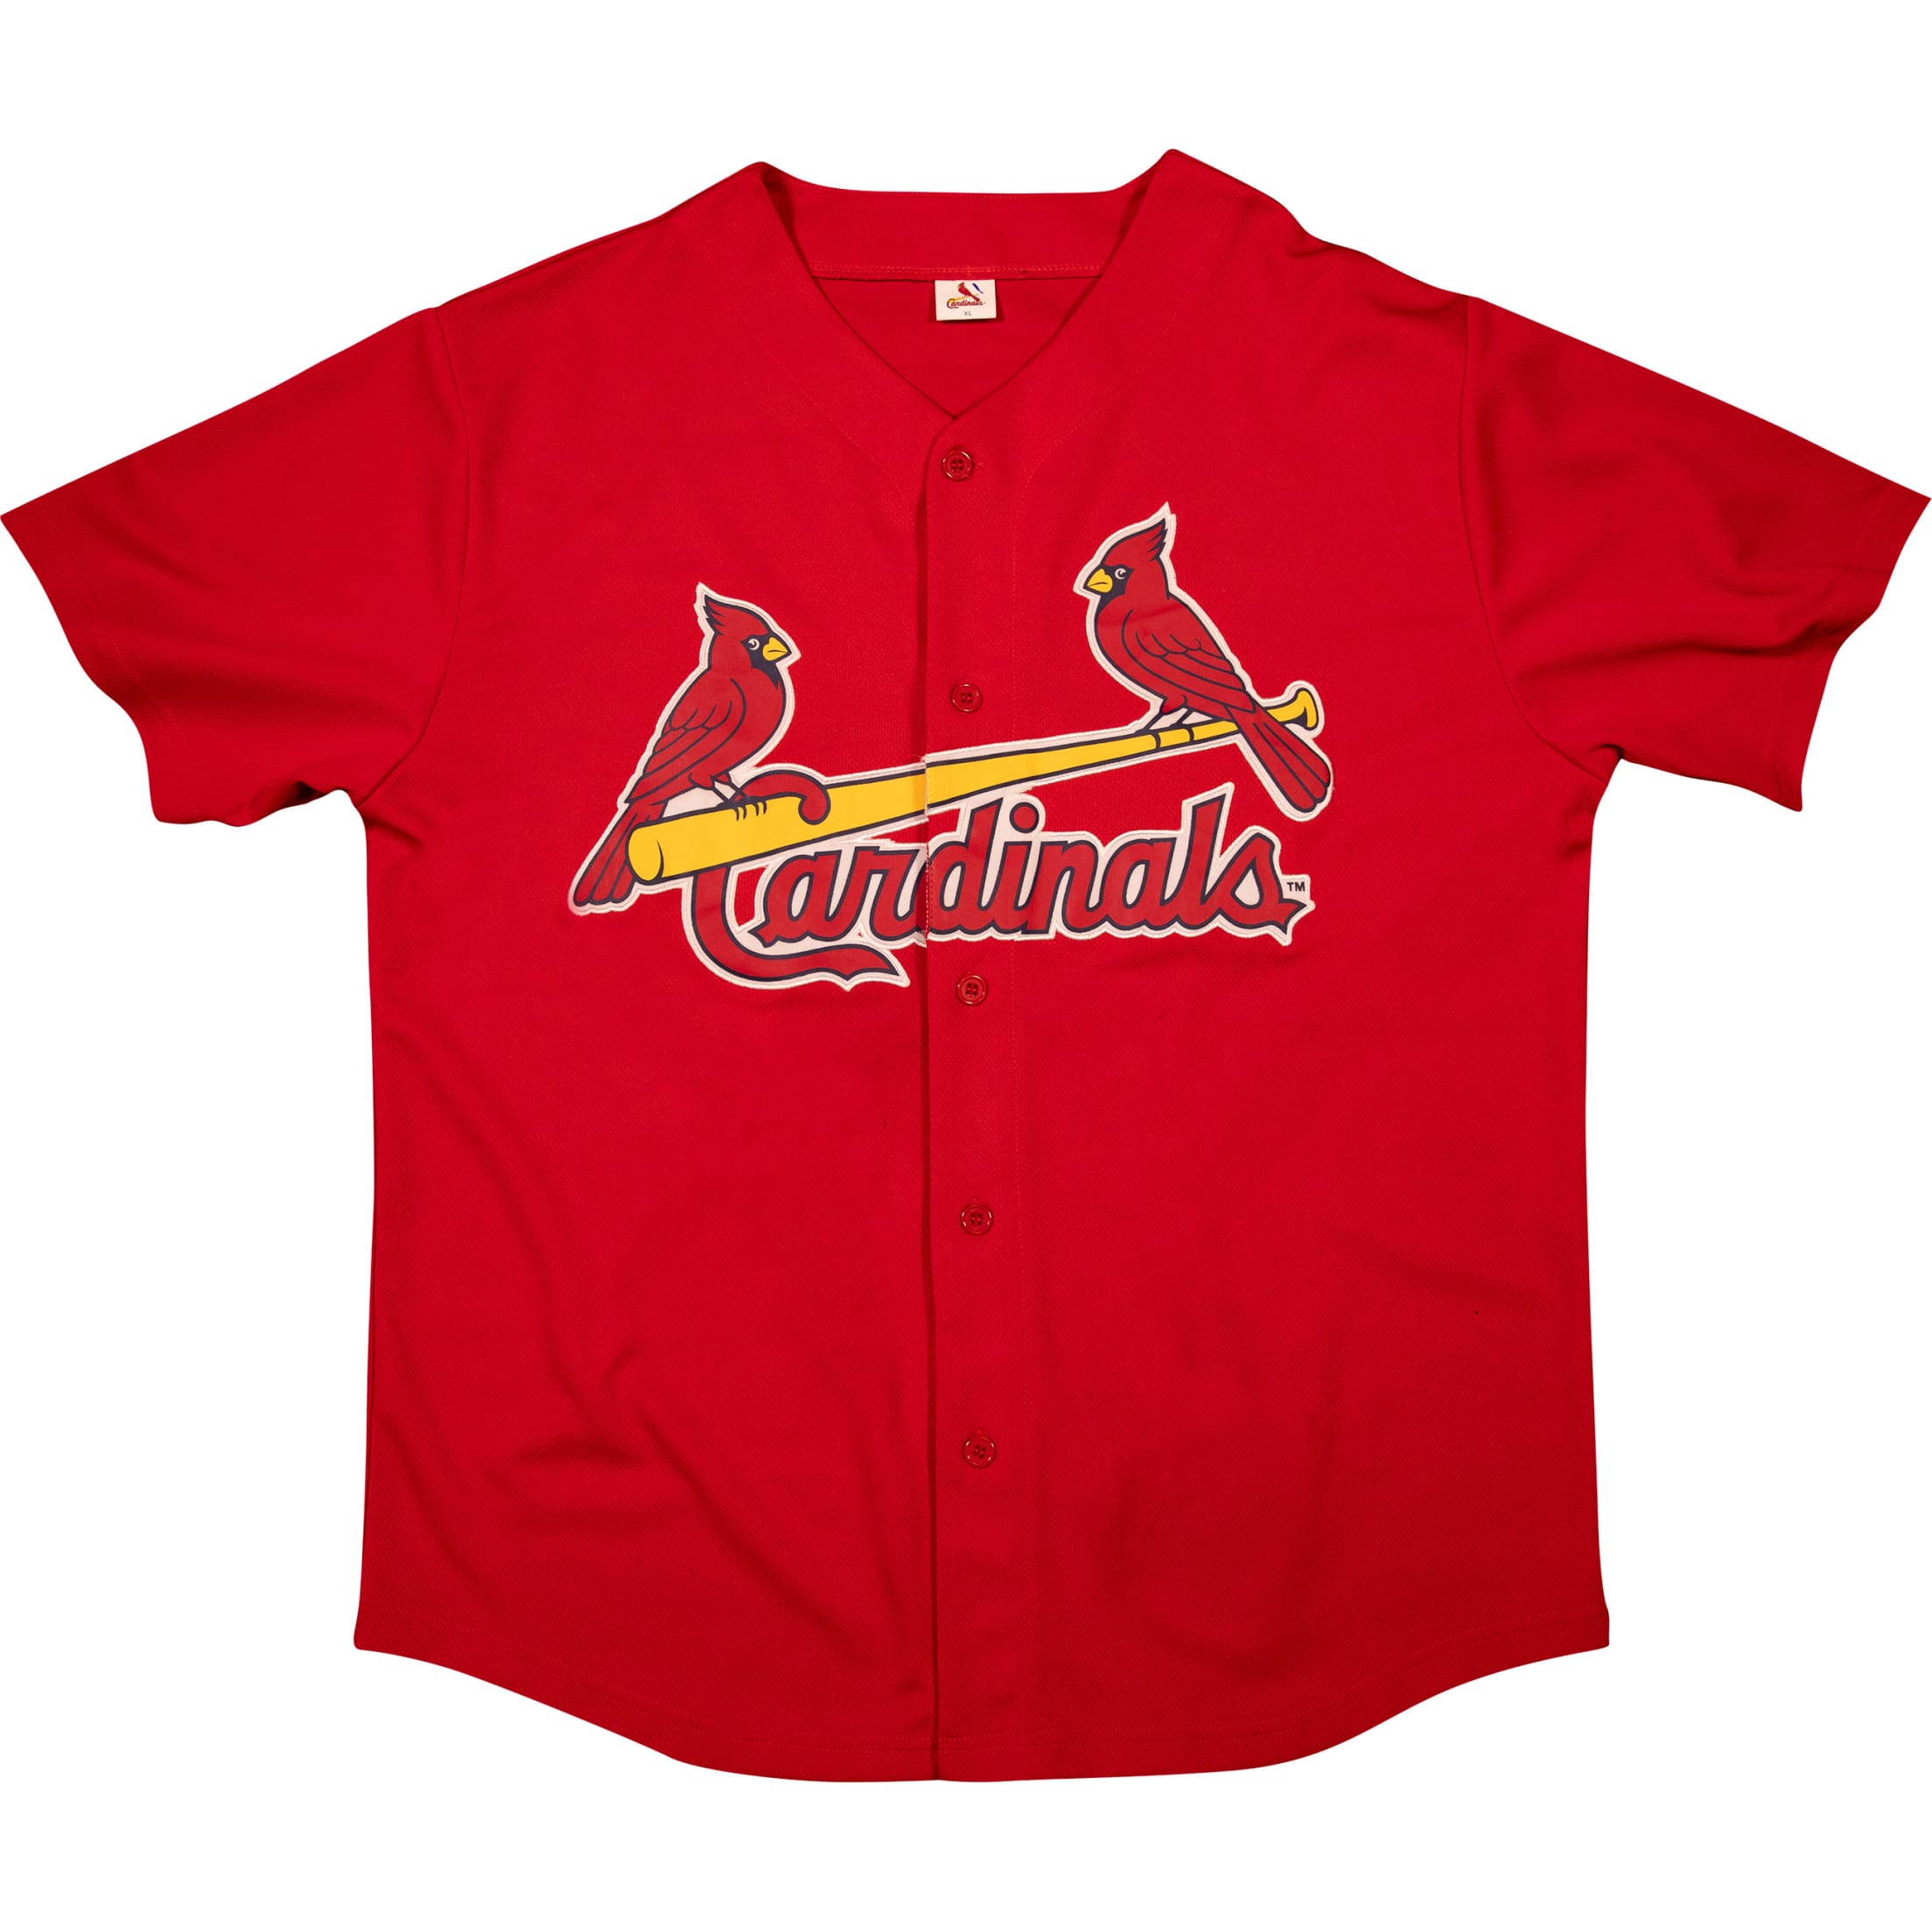 Yadier Molina 4 St. Louis Cardinals Majestic Jersey T-Shirt Women's Large  Red